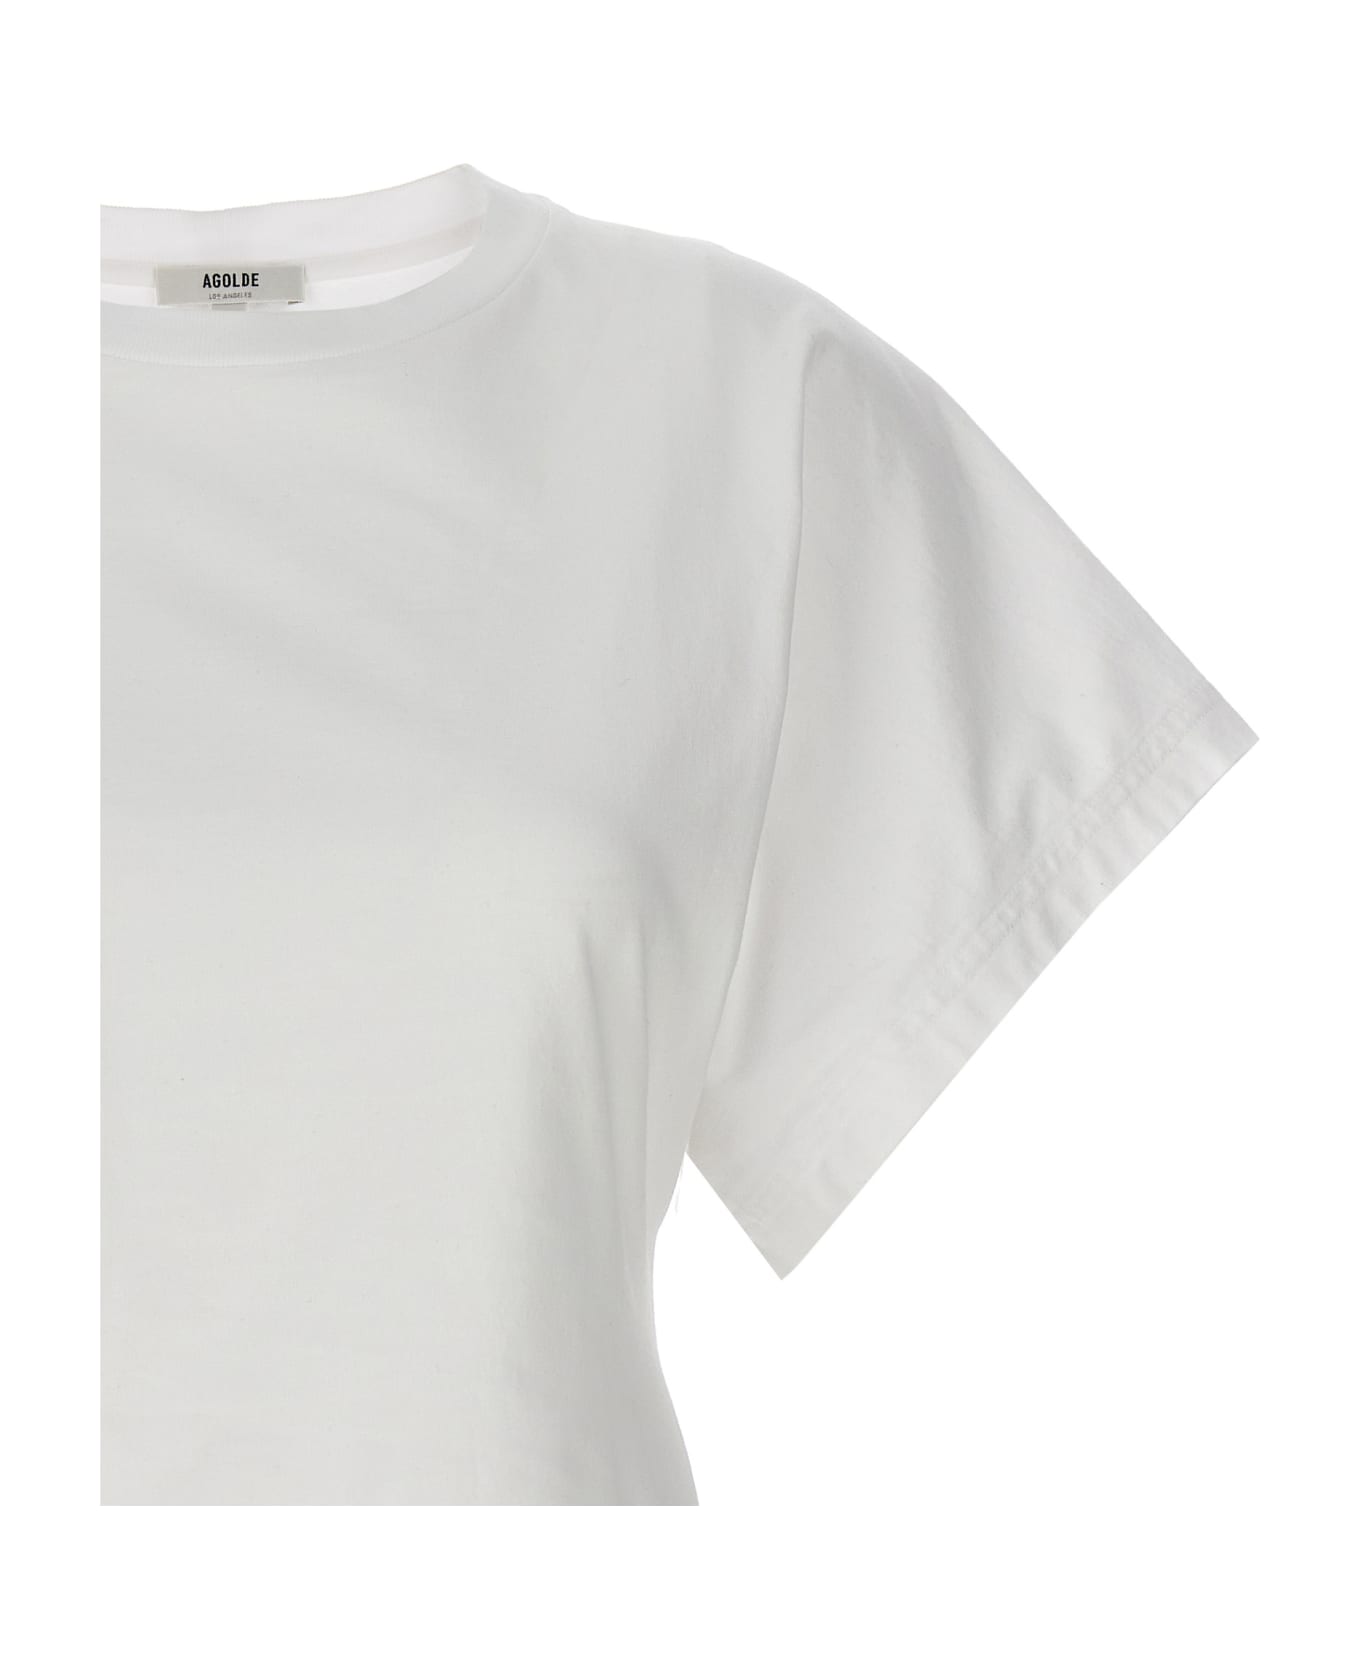 AGOLDE 'britt' T-shirt - WHITE Tシャツ